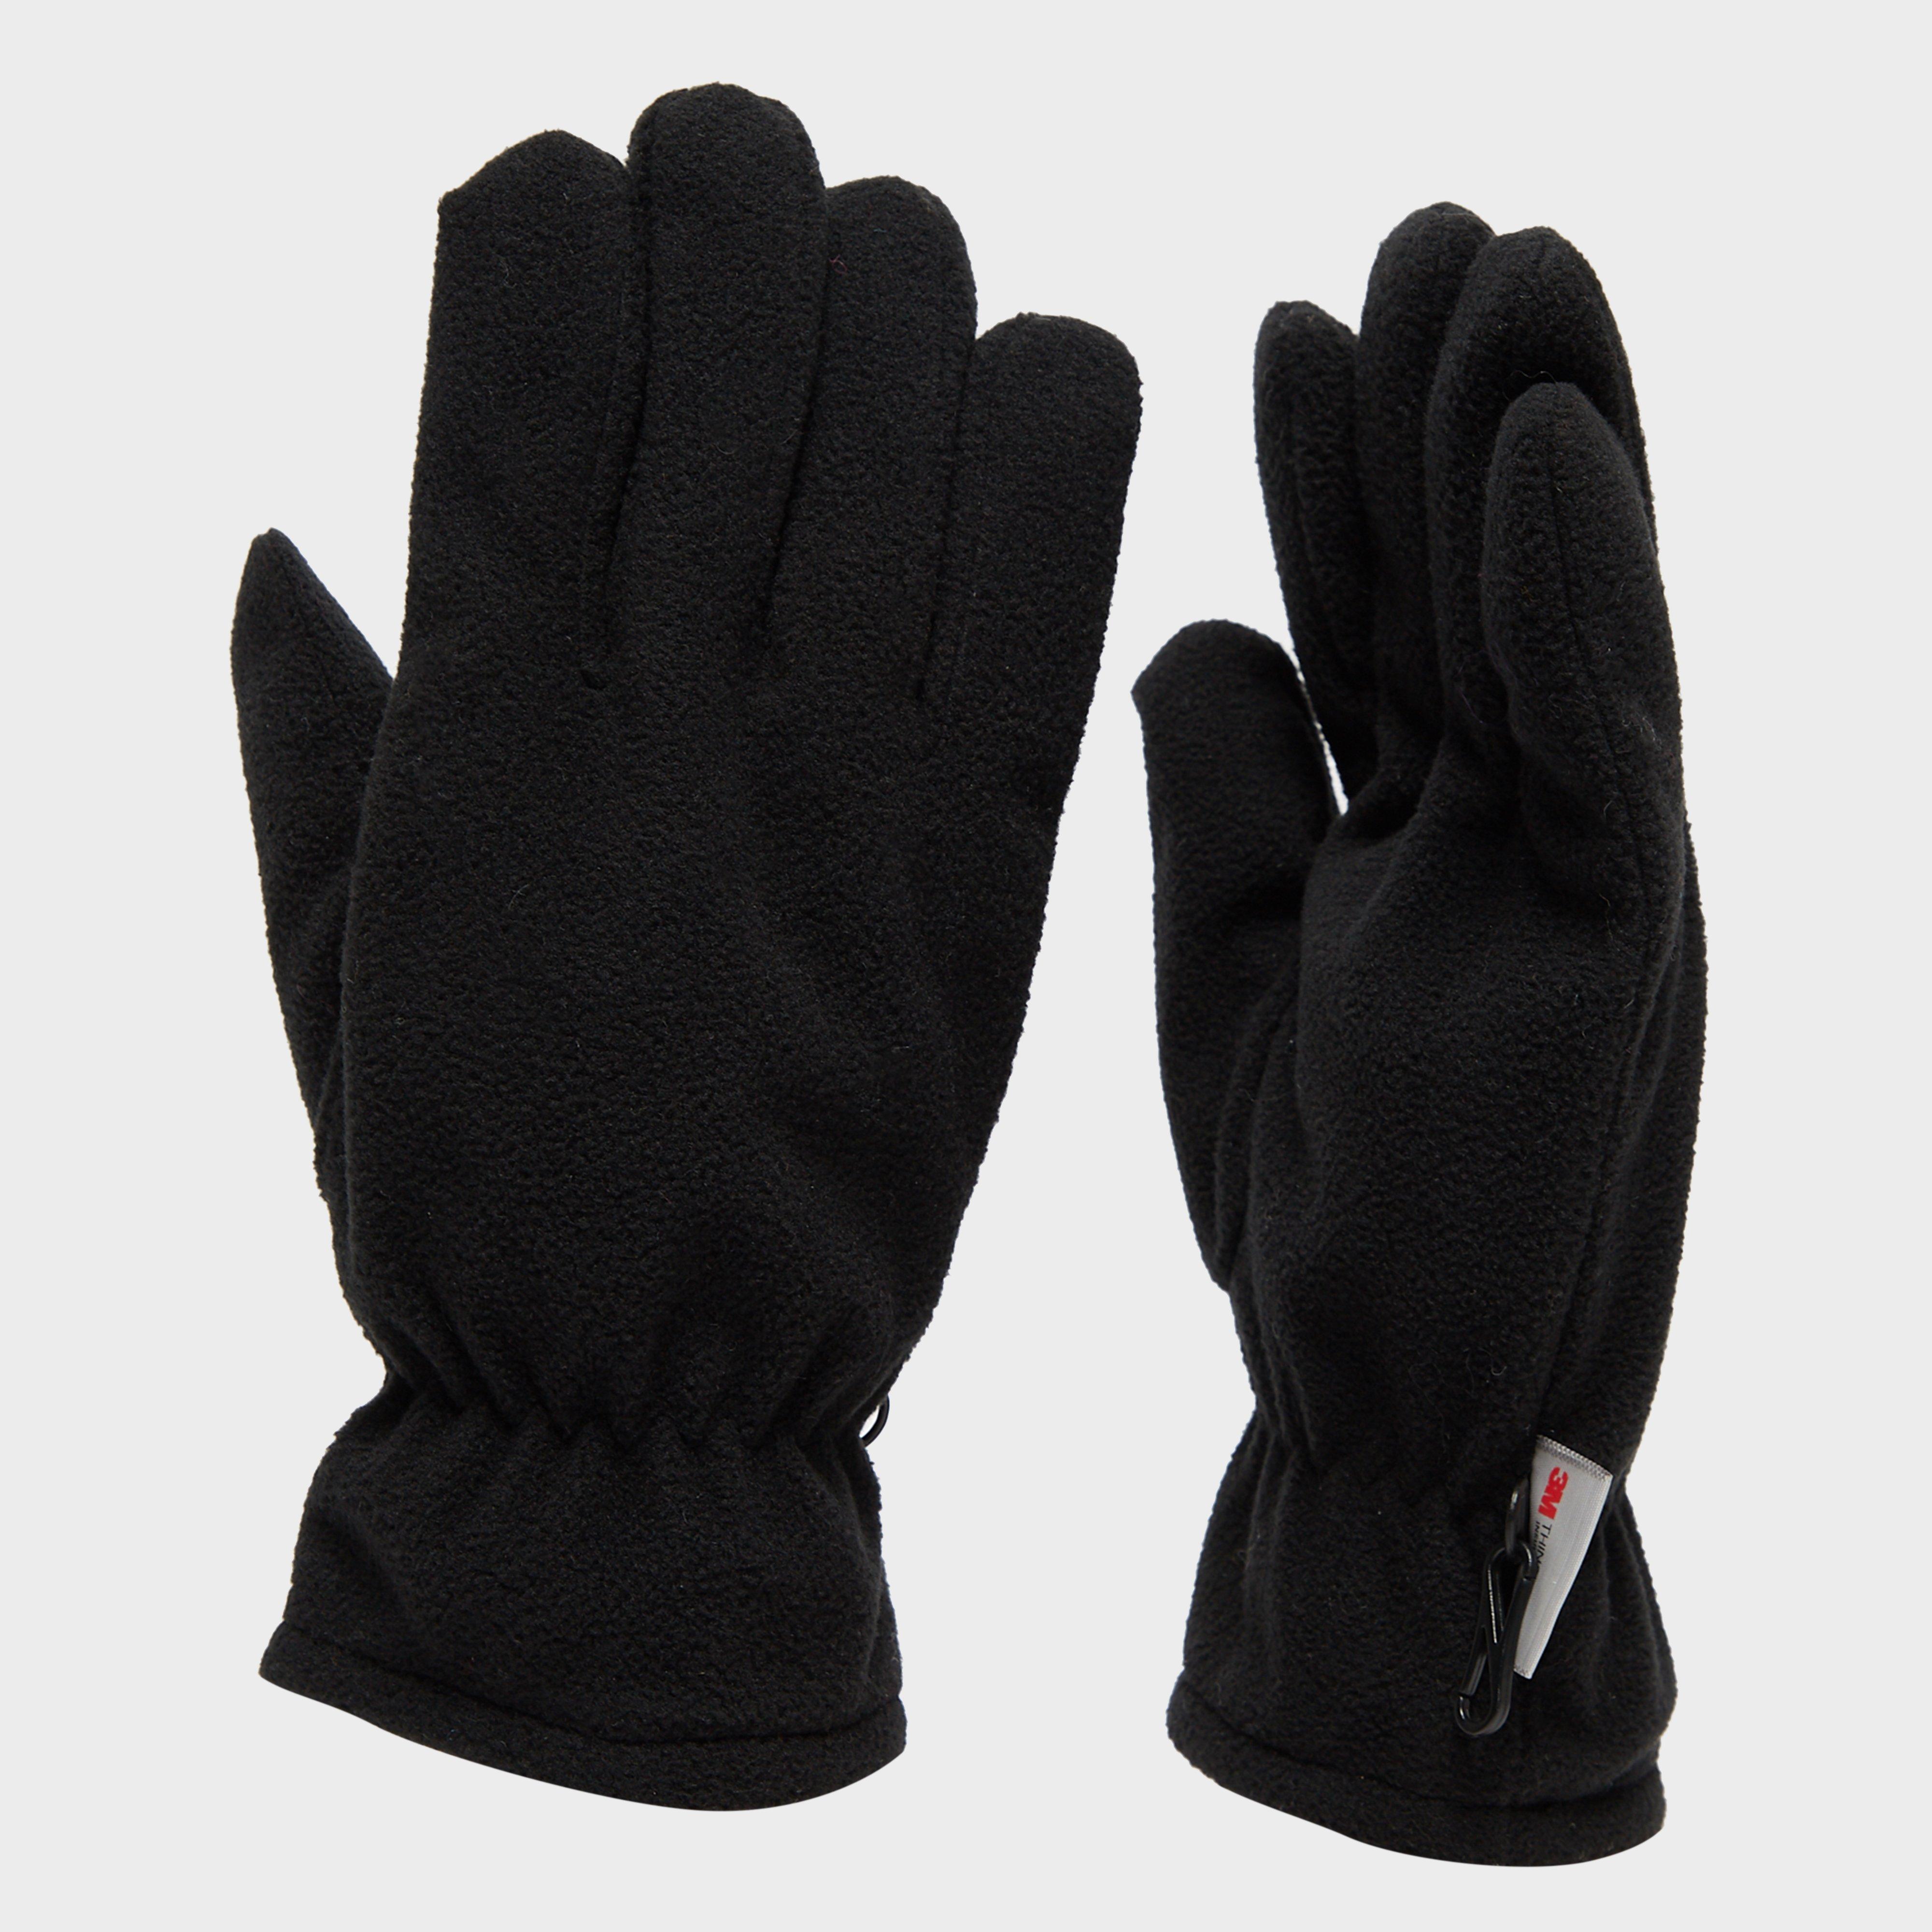 Peter Storm Men's Waterproof Thinsulate Gloves, Black